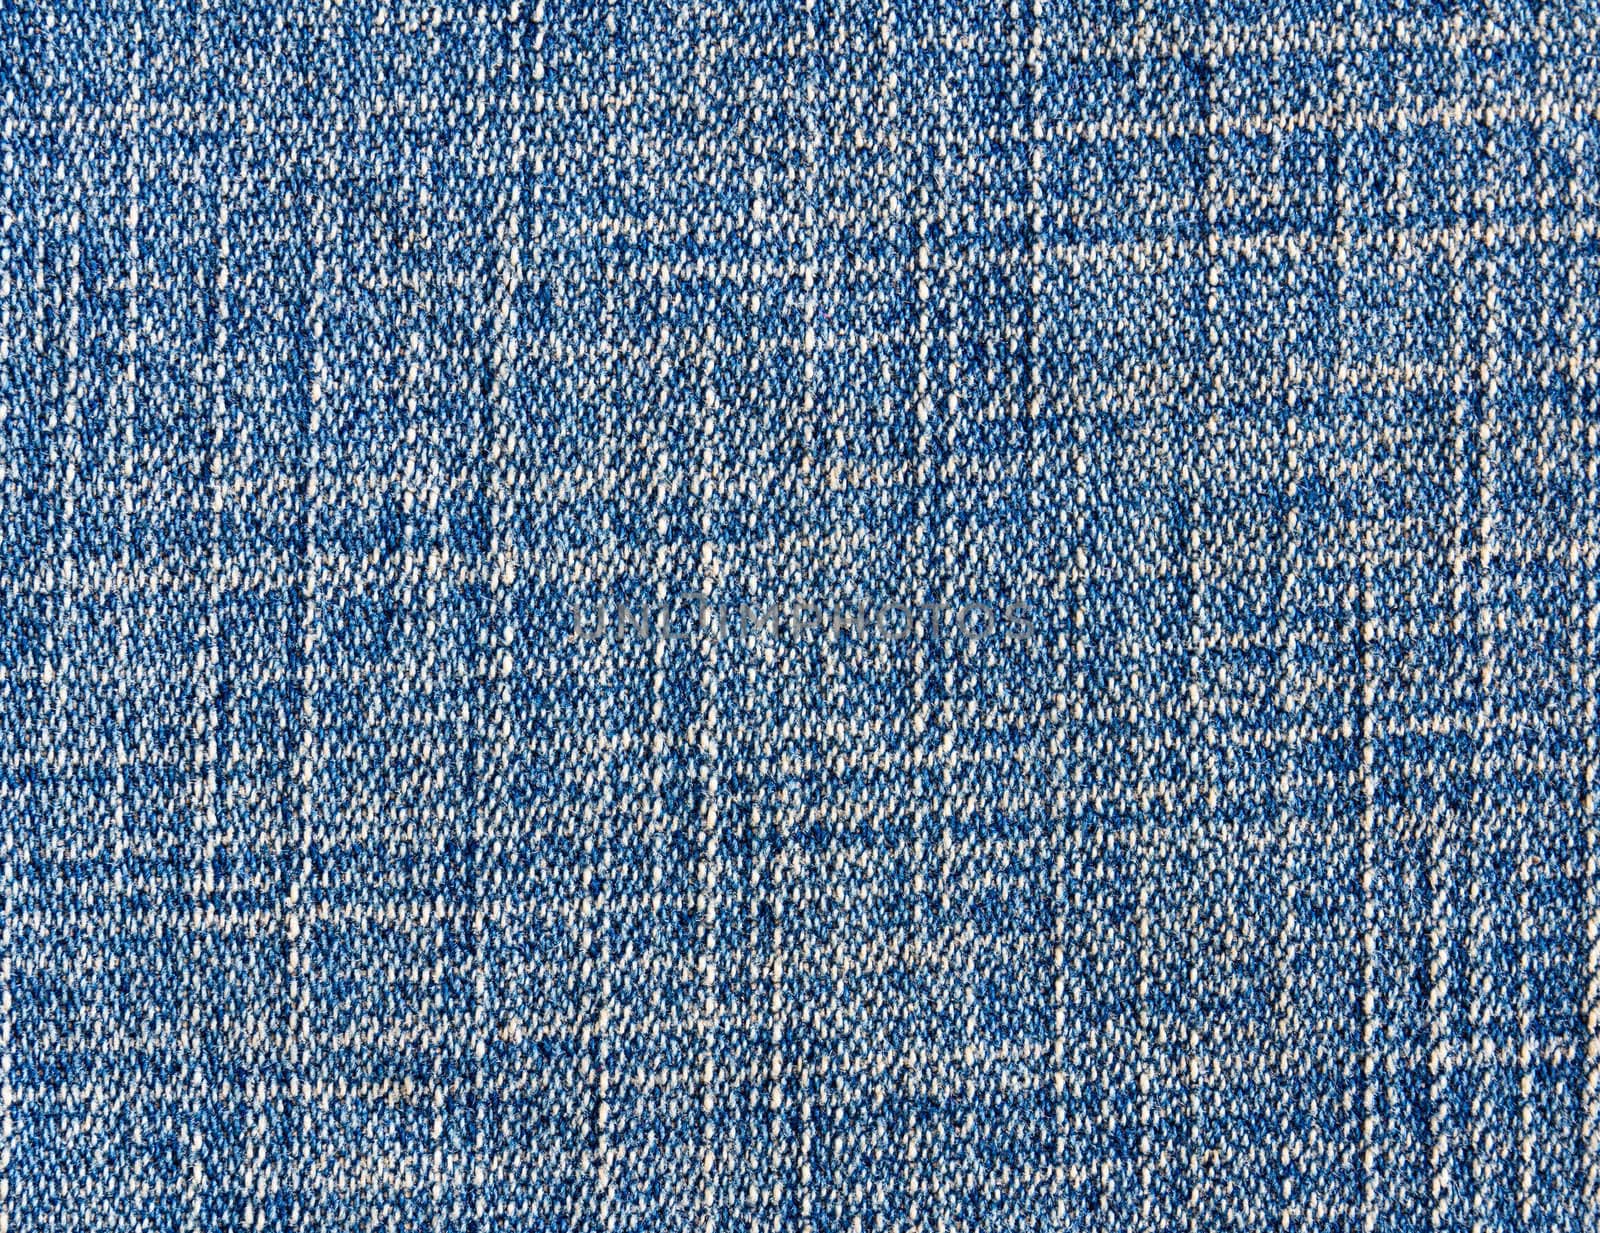 Blue jean texture